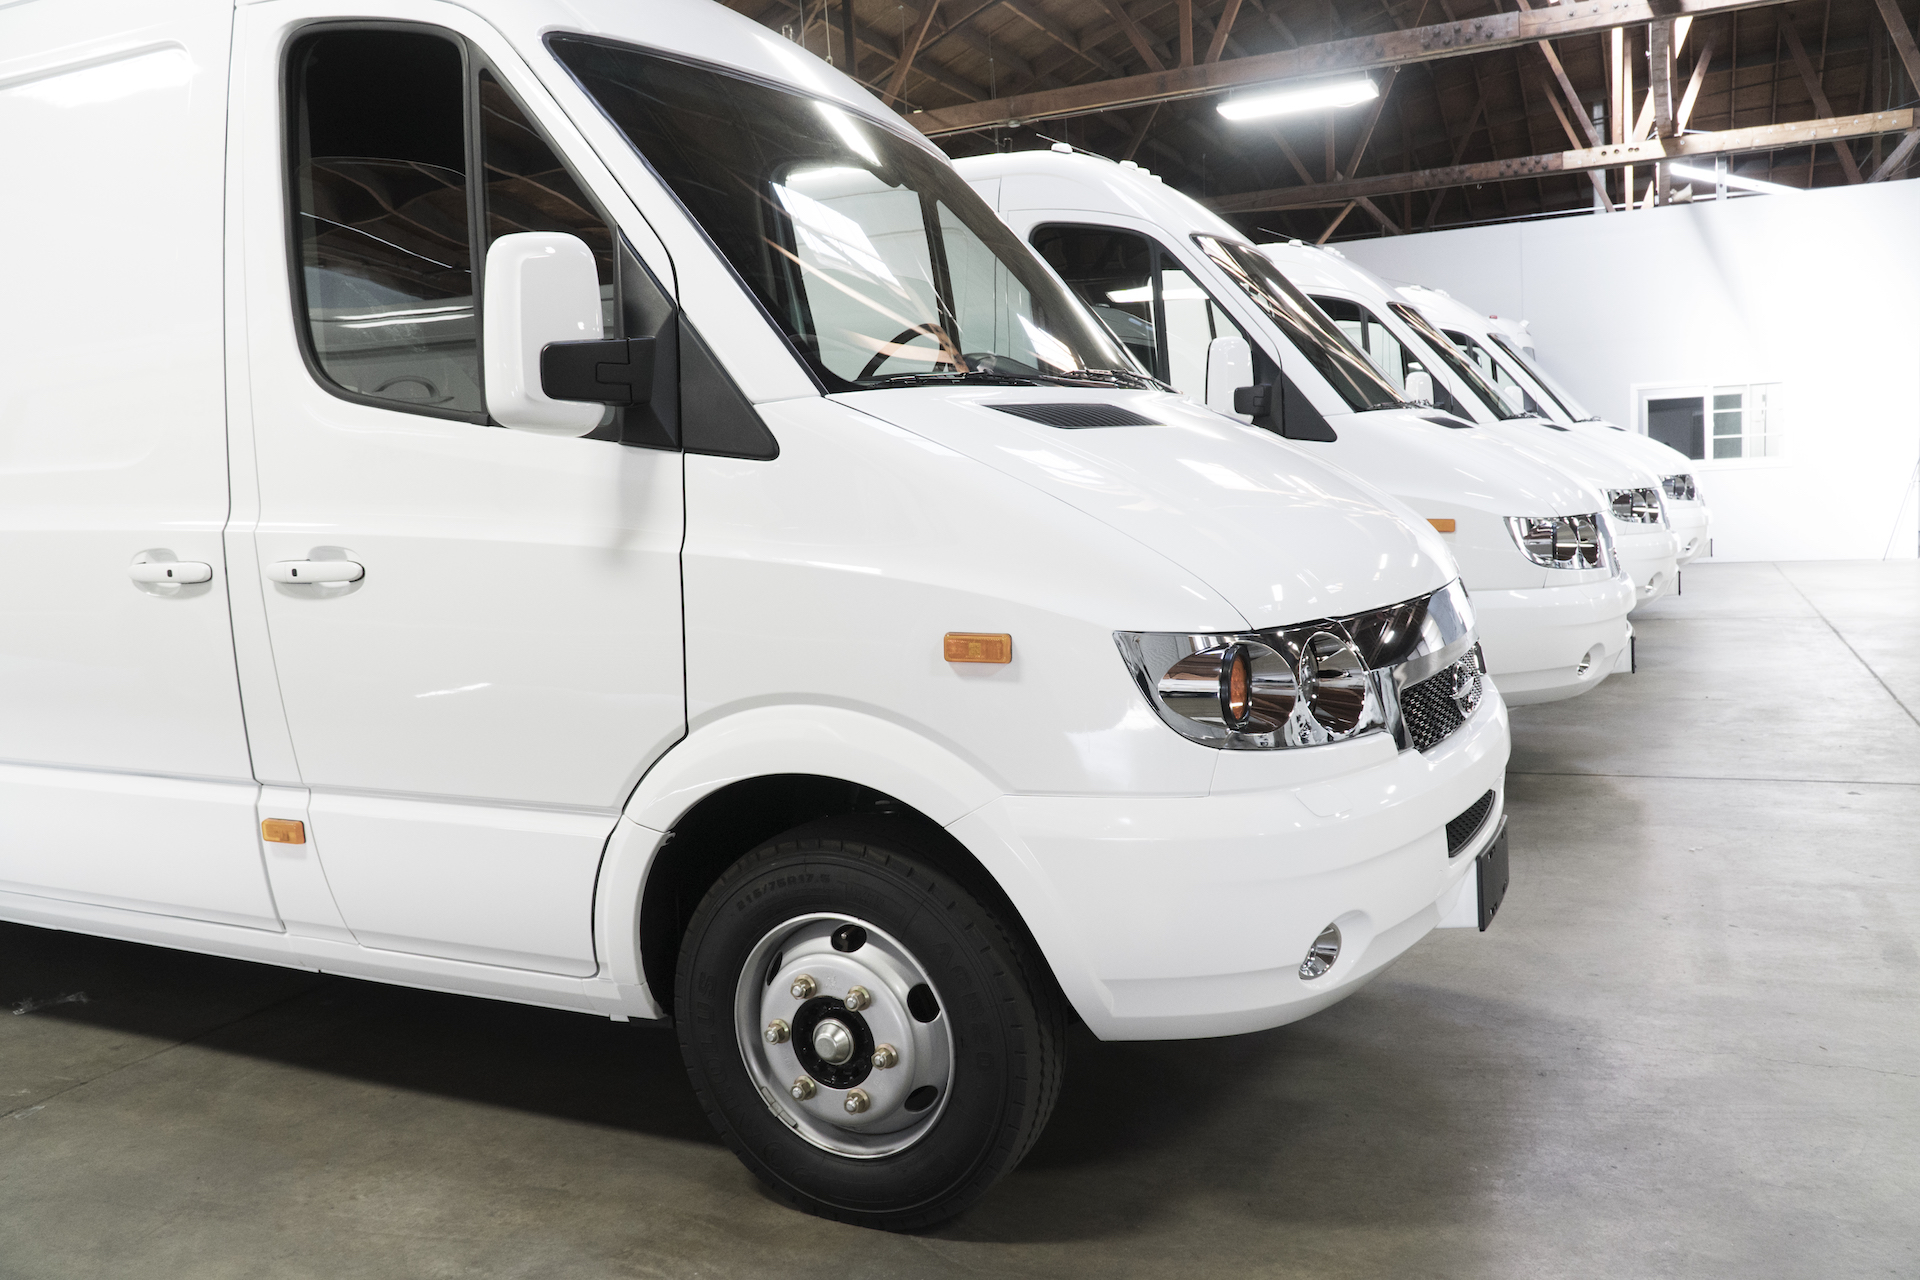 FedEX is getting a fleet of 1,000 electric vans from Chanje EV startup